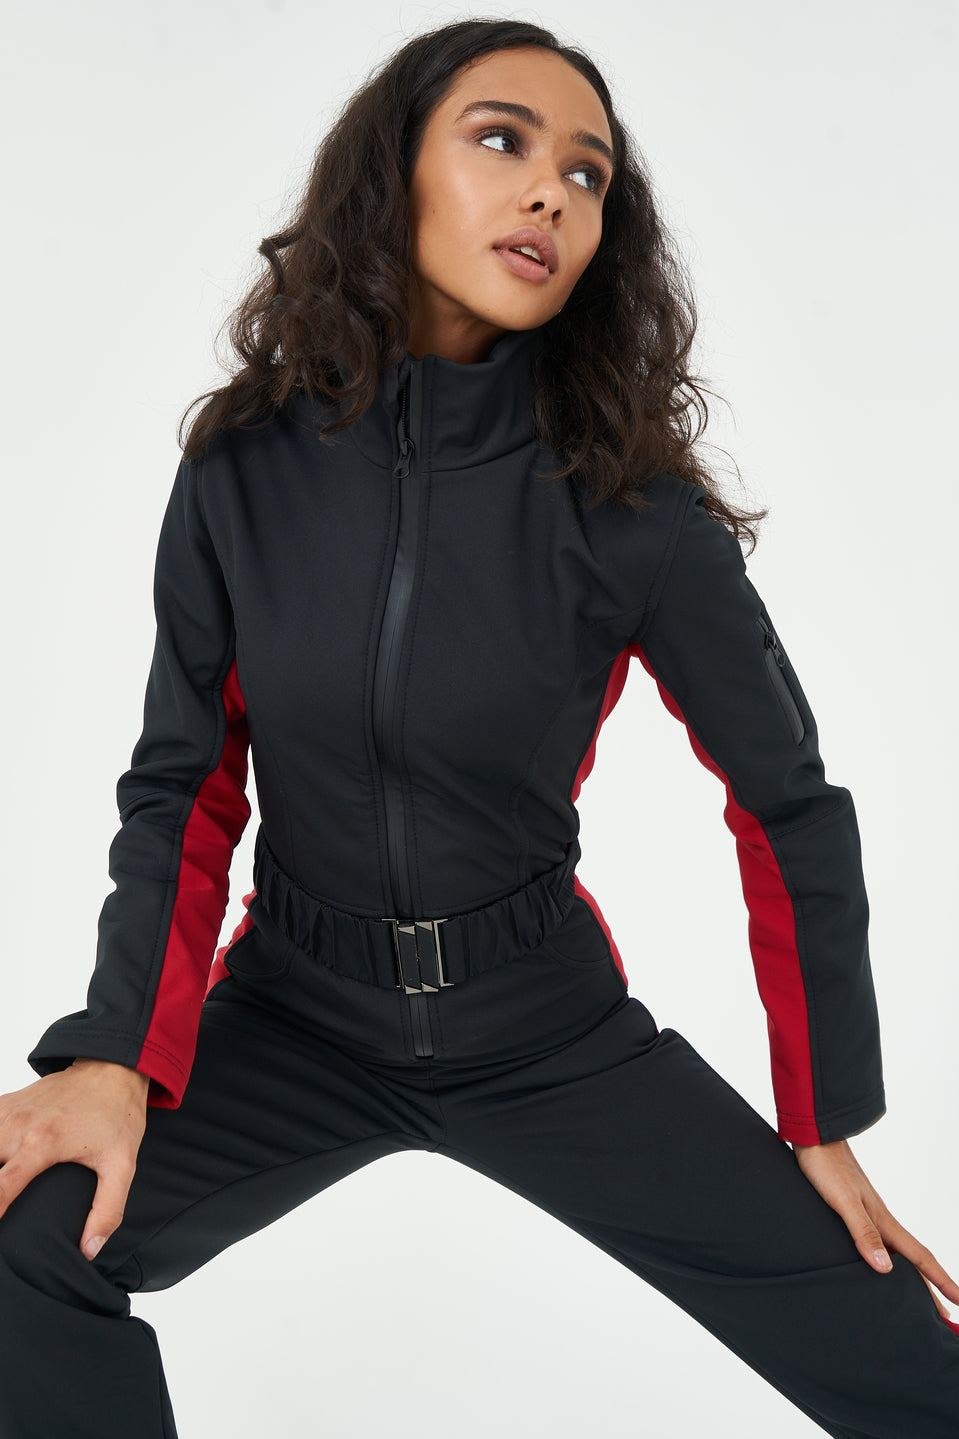 Ski suit slim fit REMBRA - Black with red stripes skinny ski jumpsuit for woman